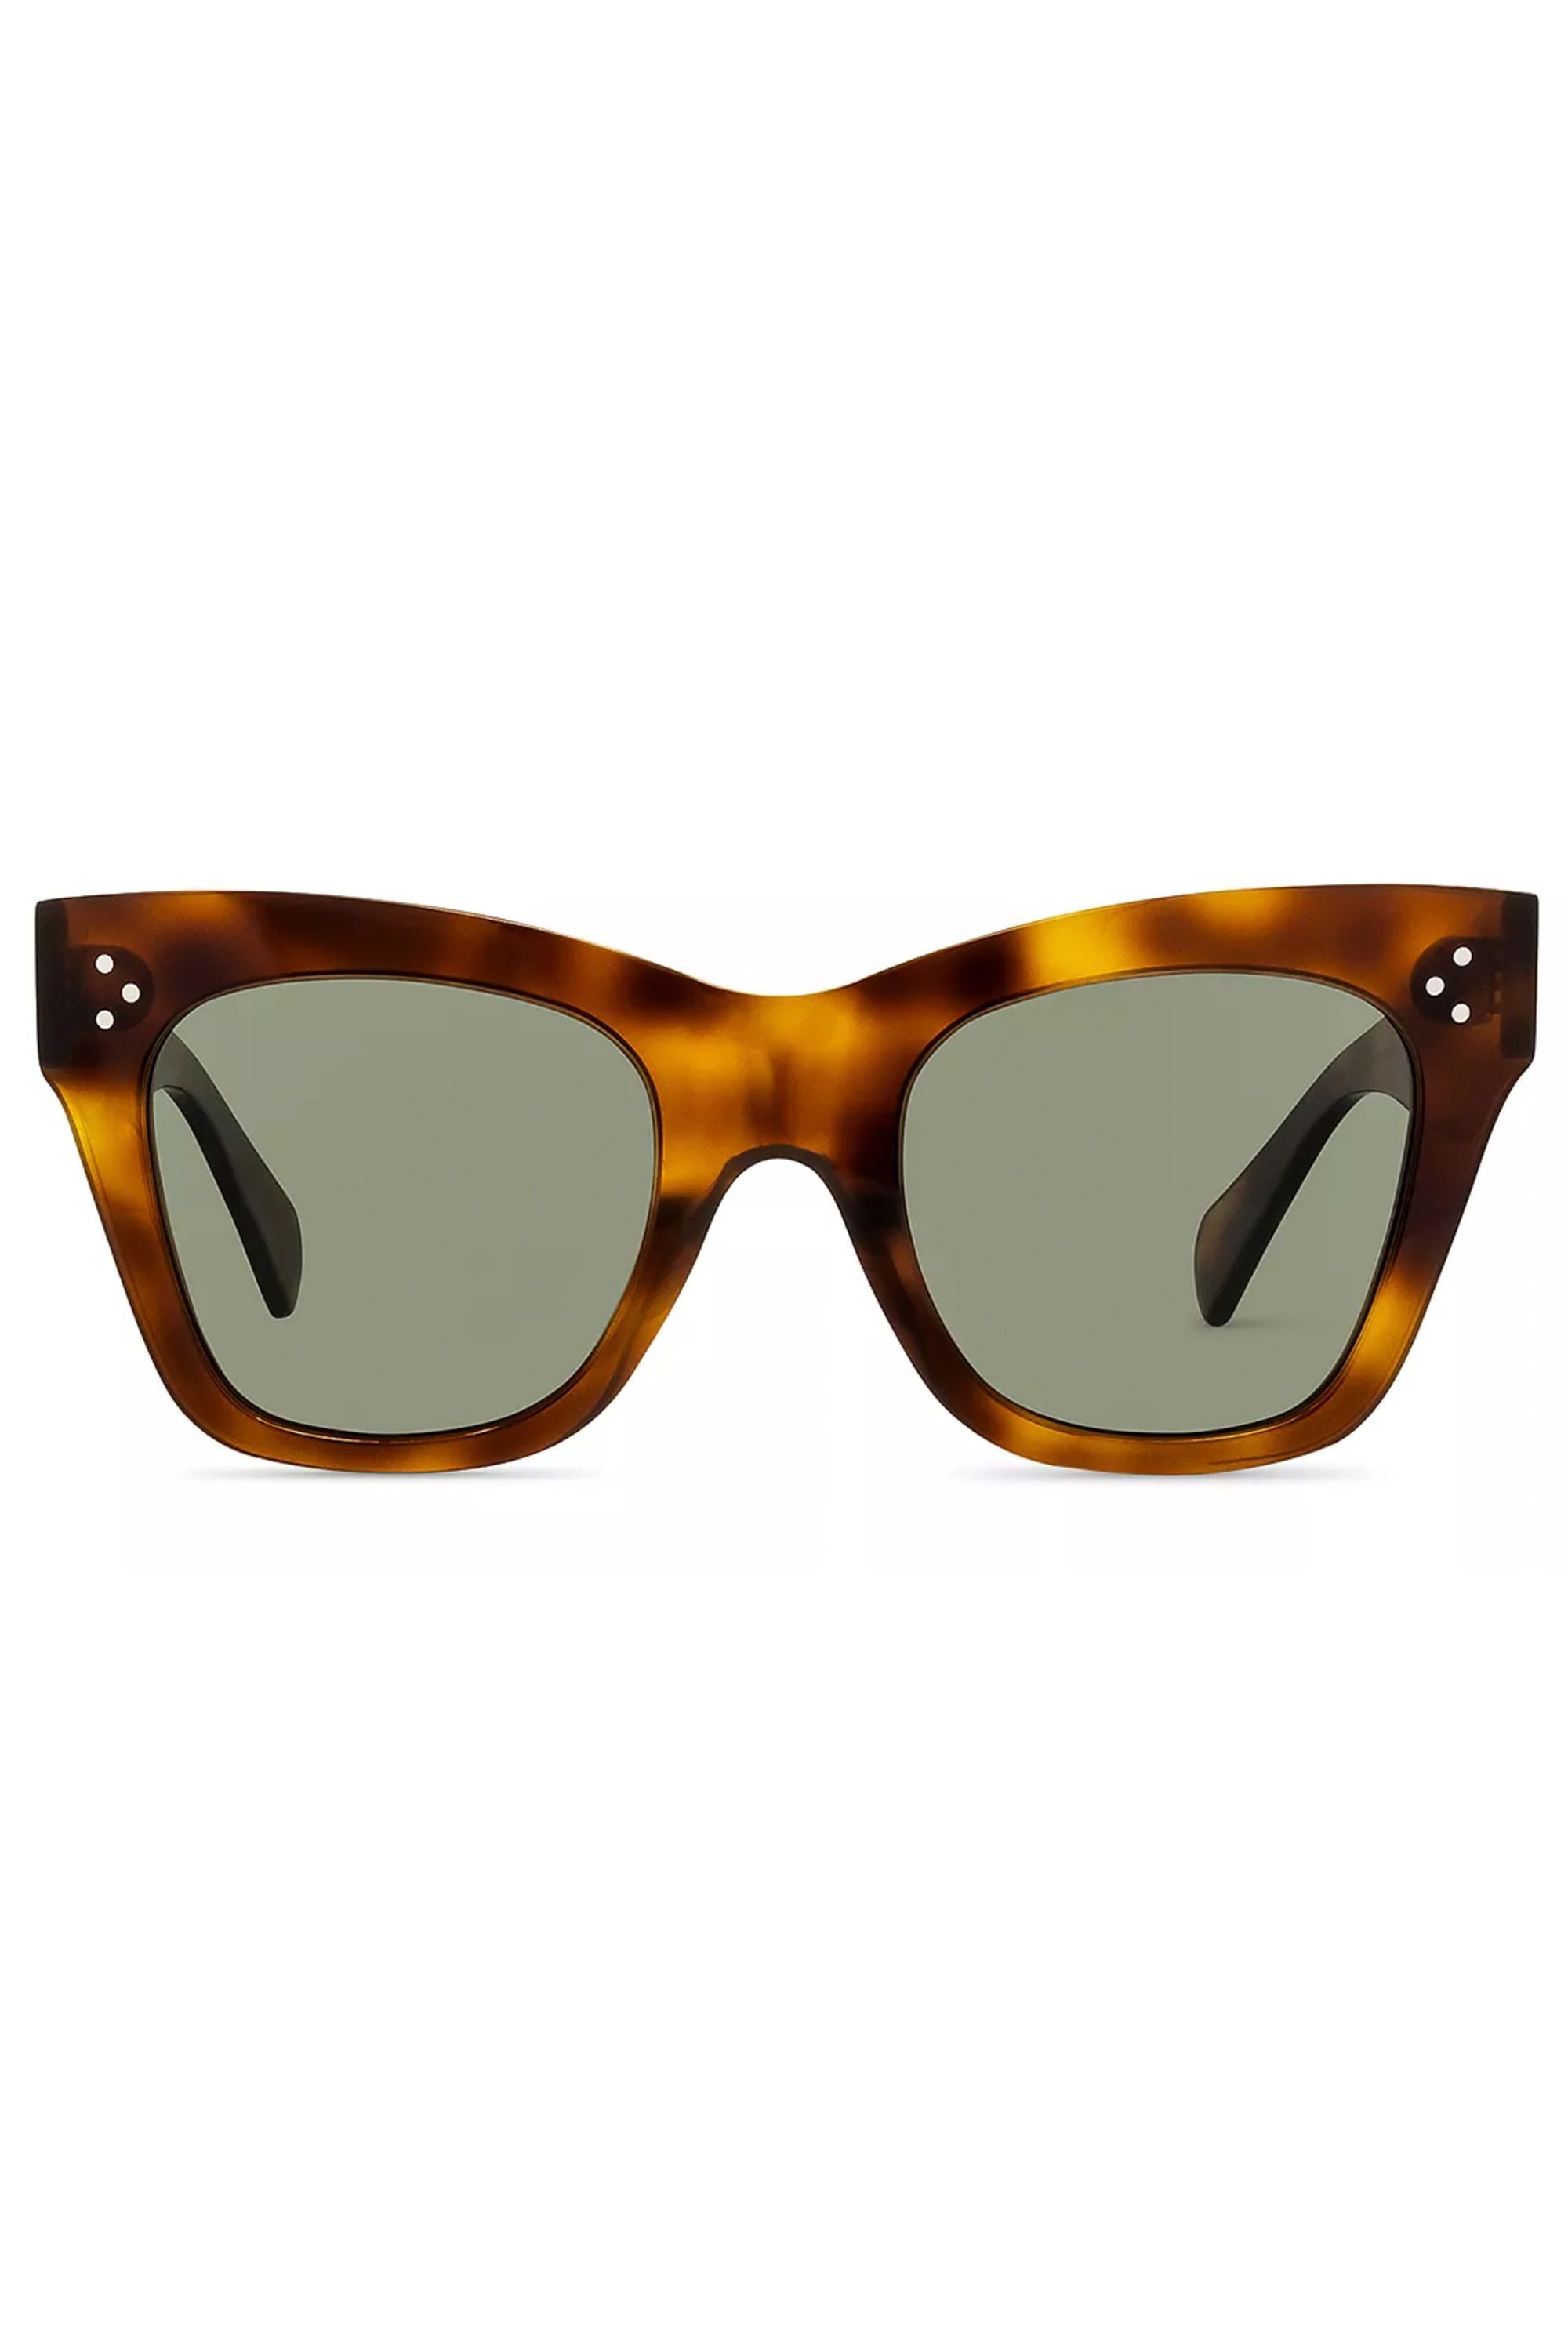 celine sunglasses for small faces